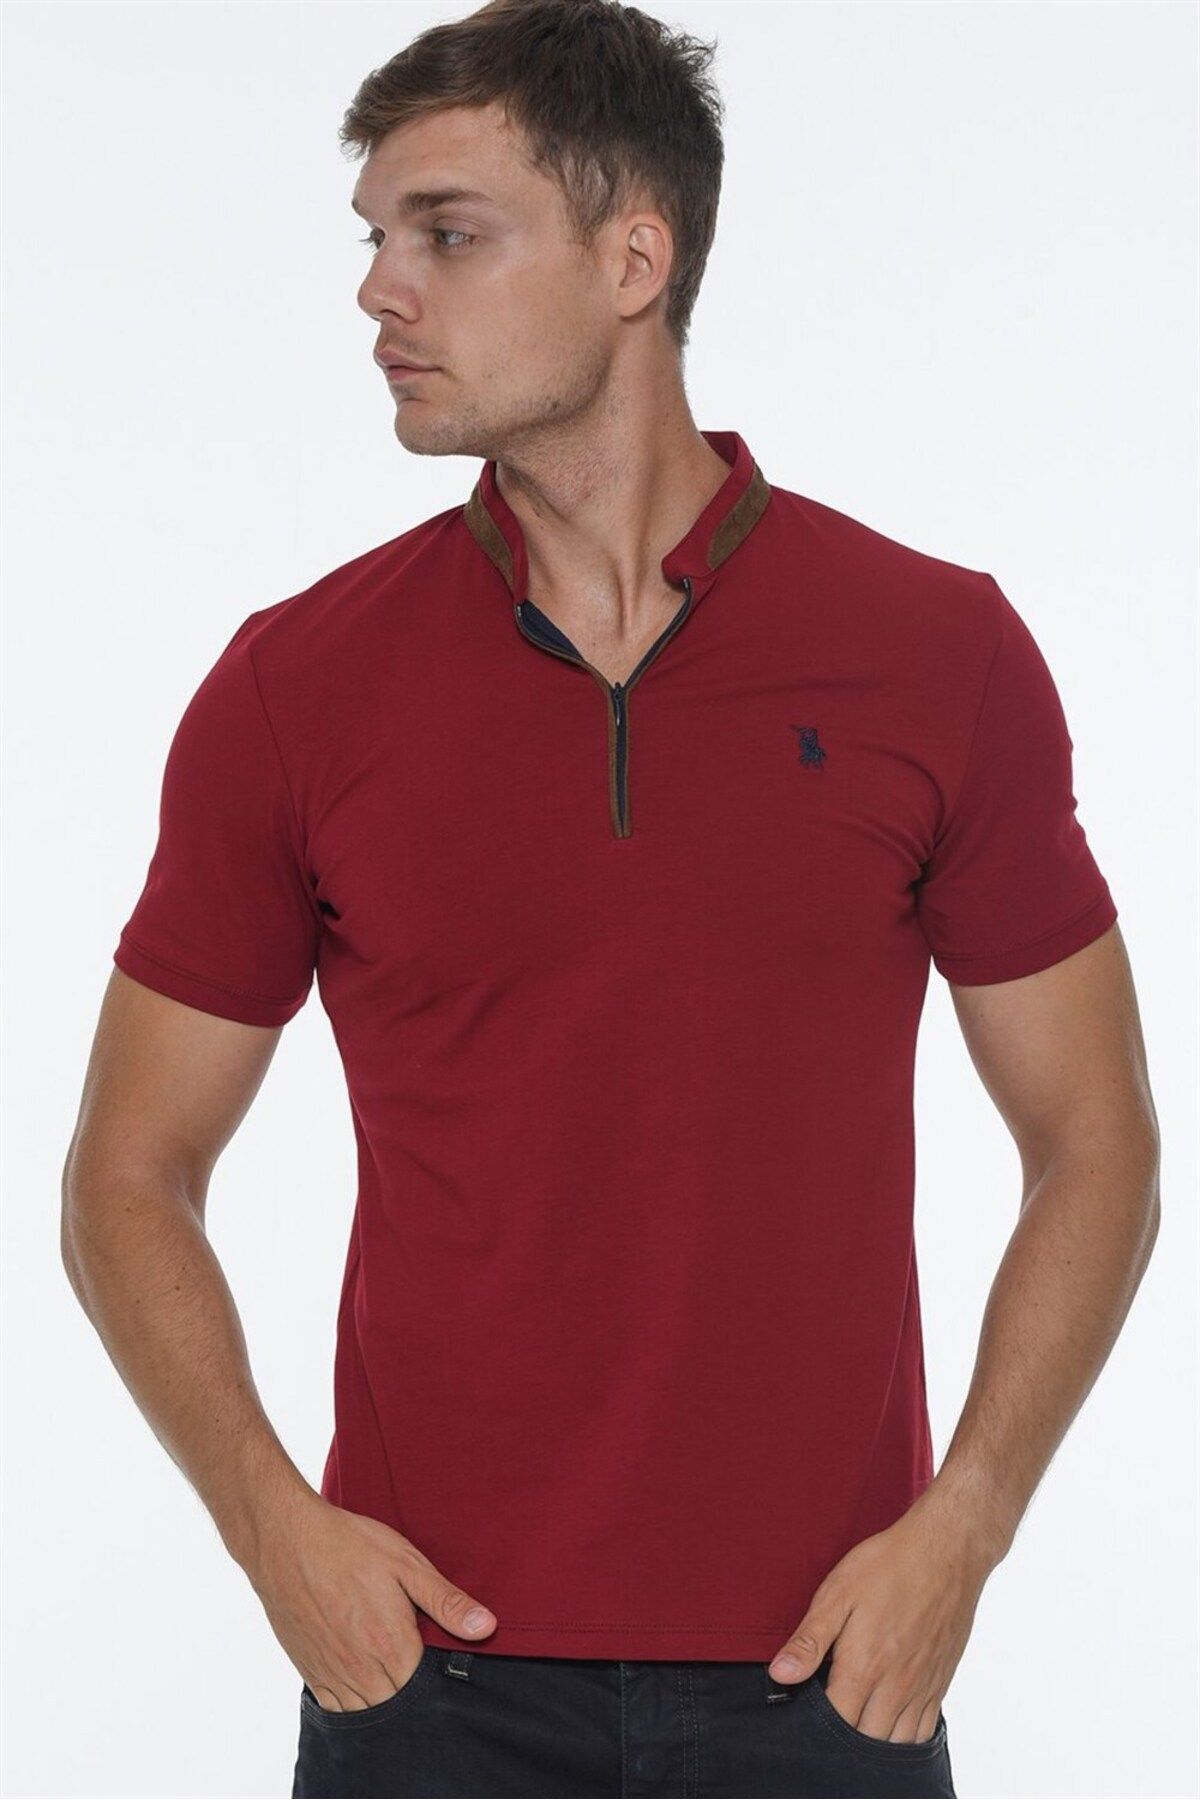 Dewberry ست پنج تی شرت مردانه زیپ دار T8571-سفید-مشکی-سرمه ای-سورمه ای-خاکی